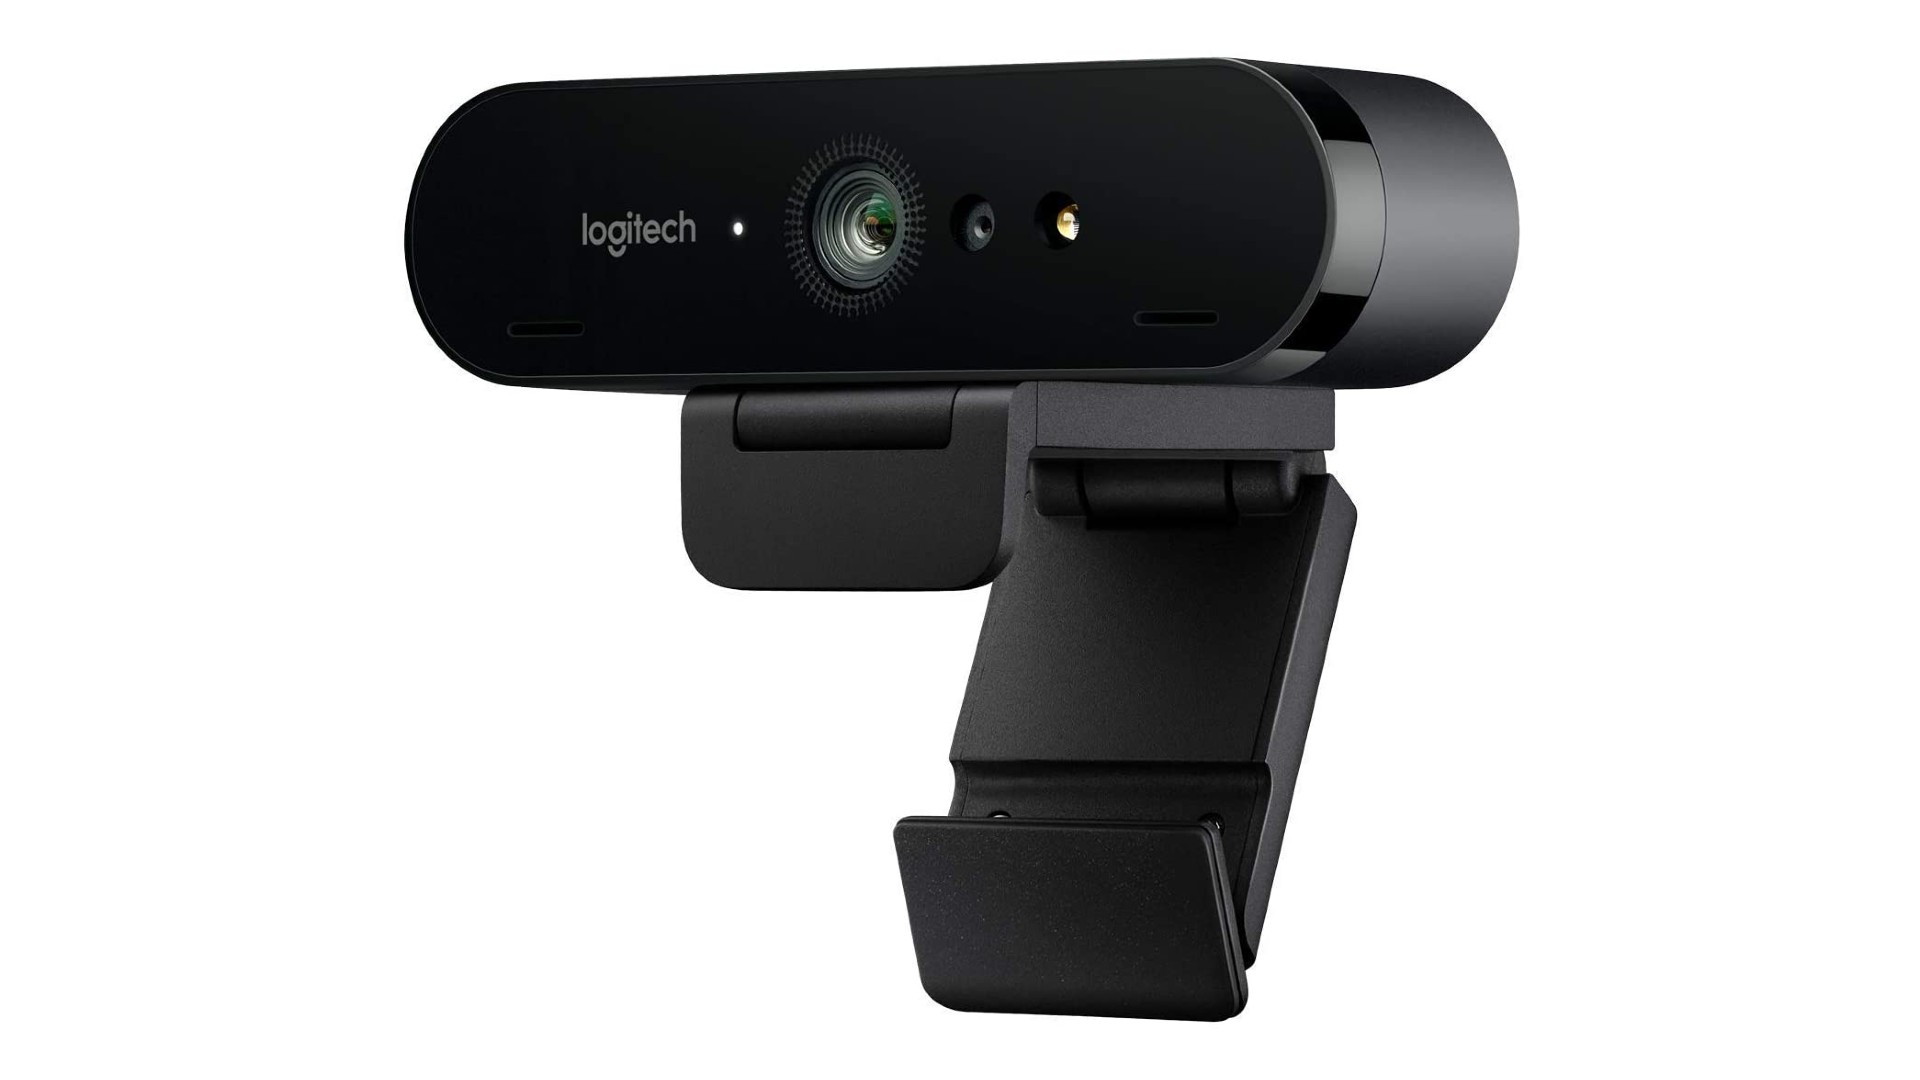 The best 4K webcam is the Logitech Brio